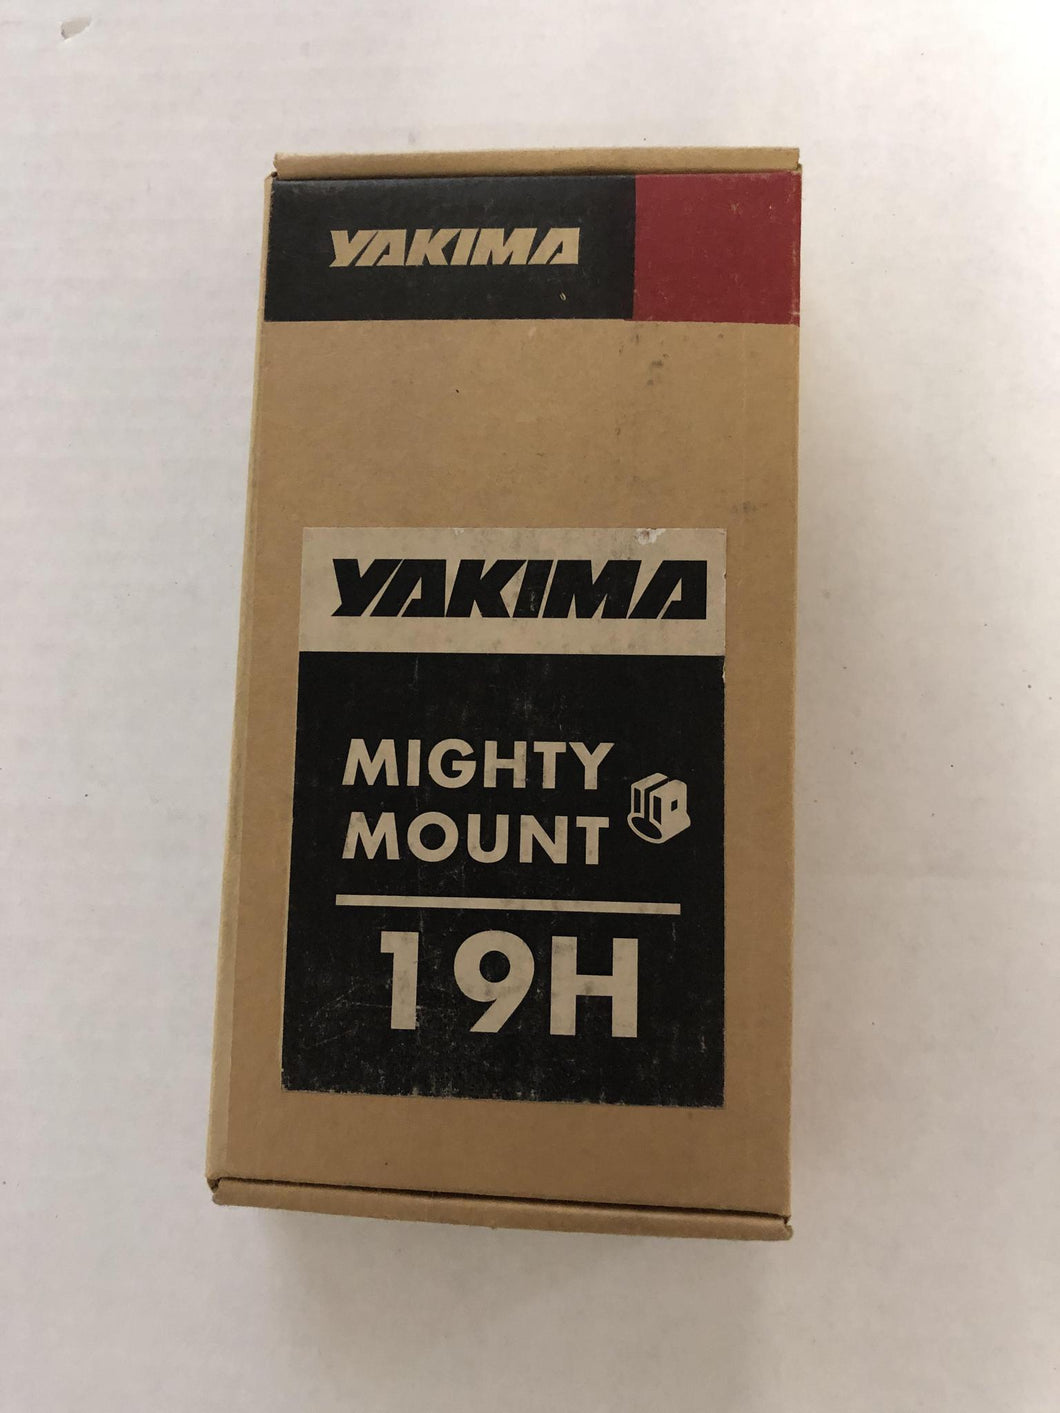 Yakima Mighty Mount 19H